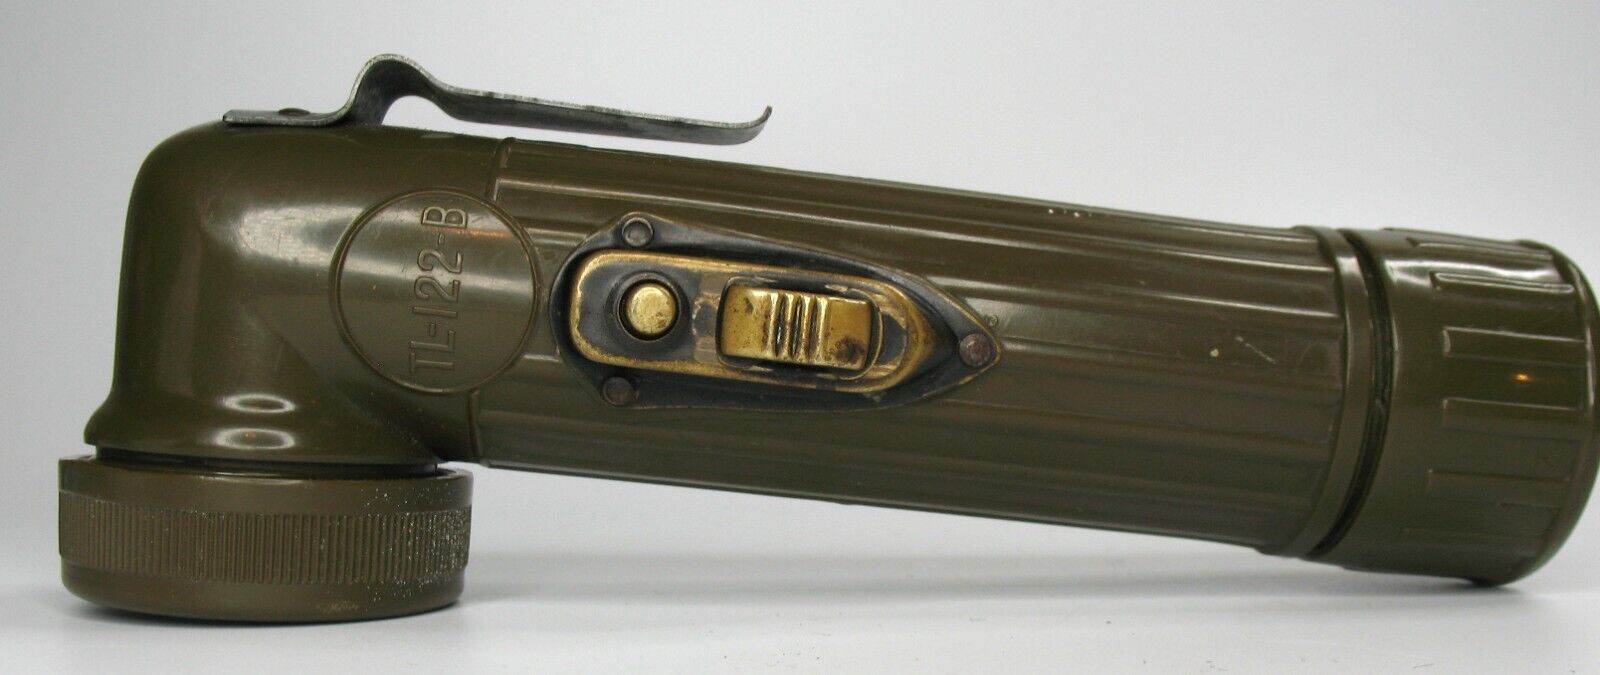 TL-122-B GITS Flashlight 1943 WW2 WWII  Military Army Made in U.S.A. Not working